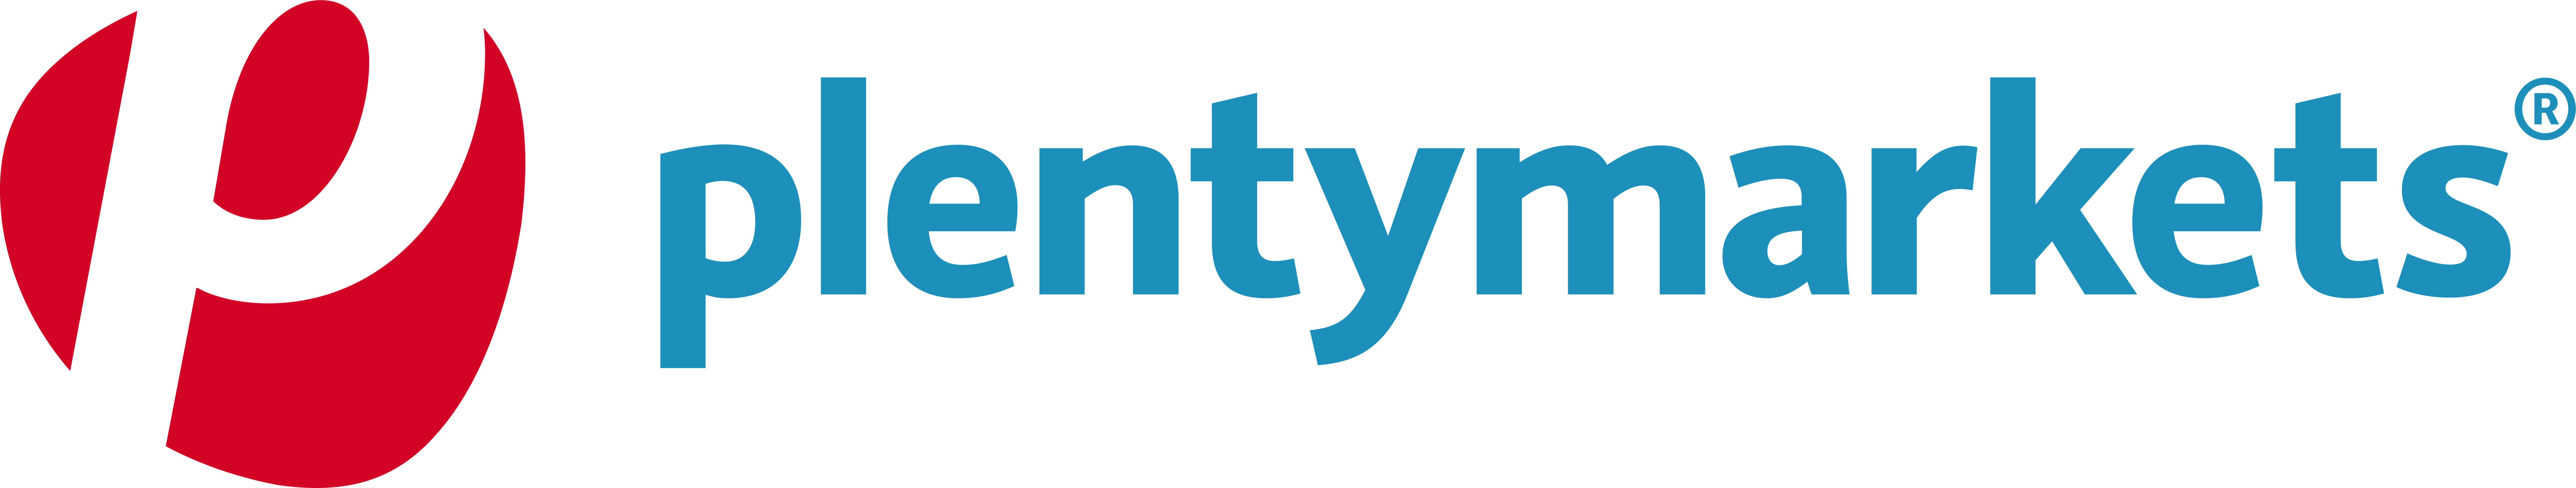 plentymarkets logo